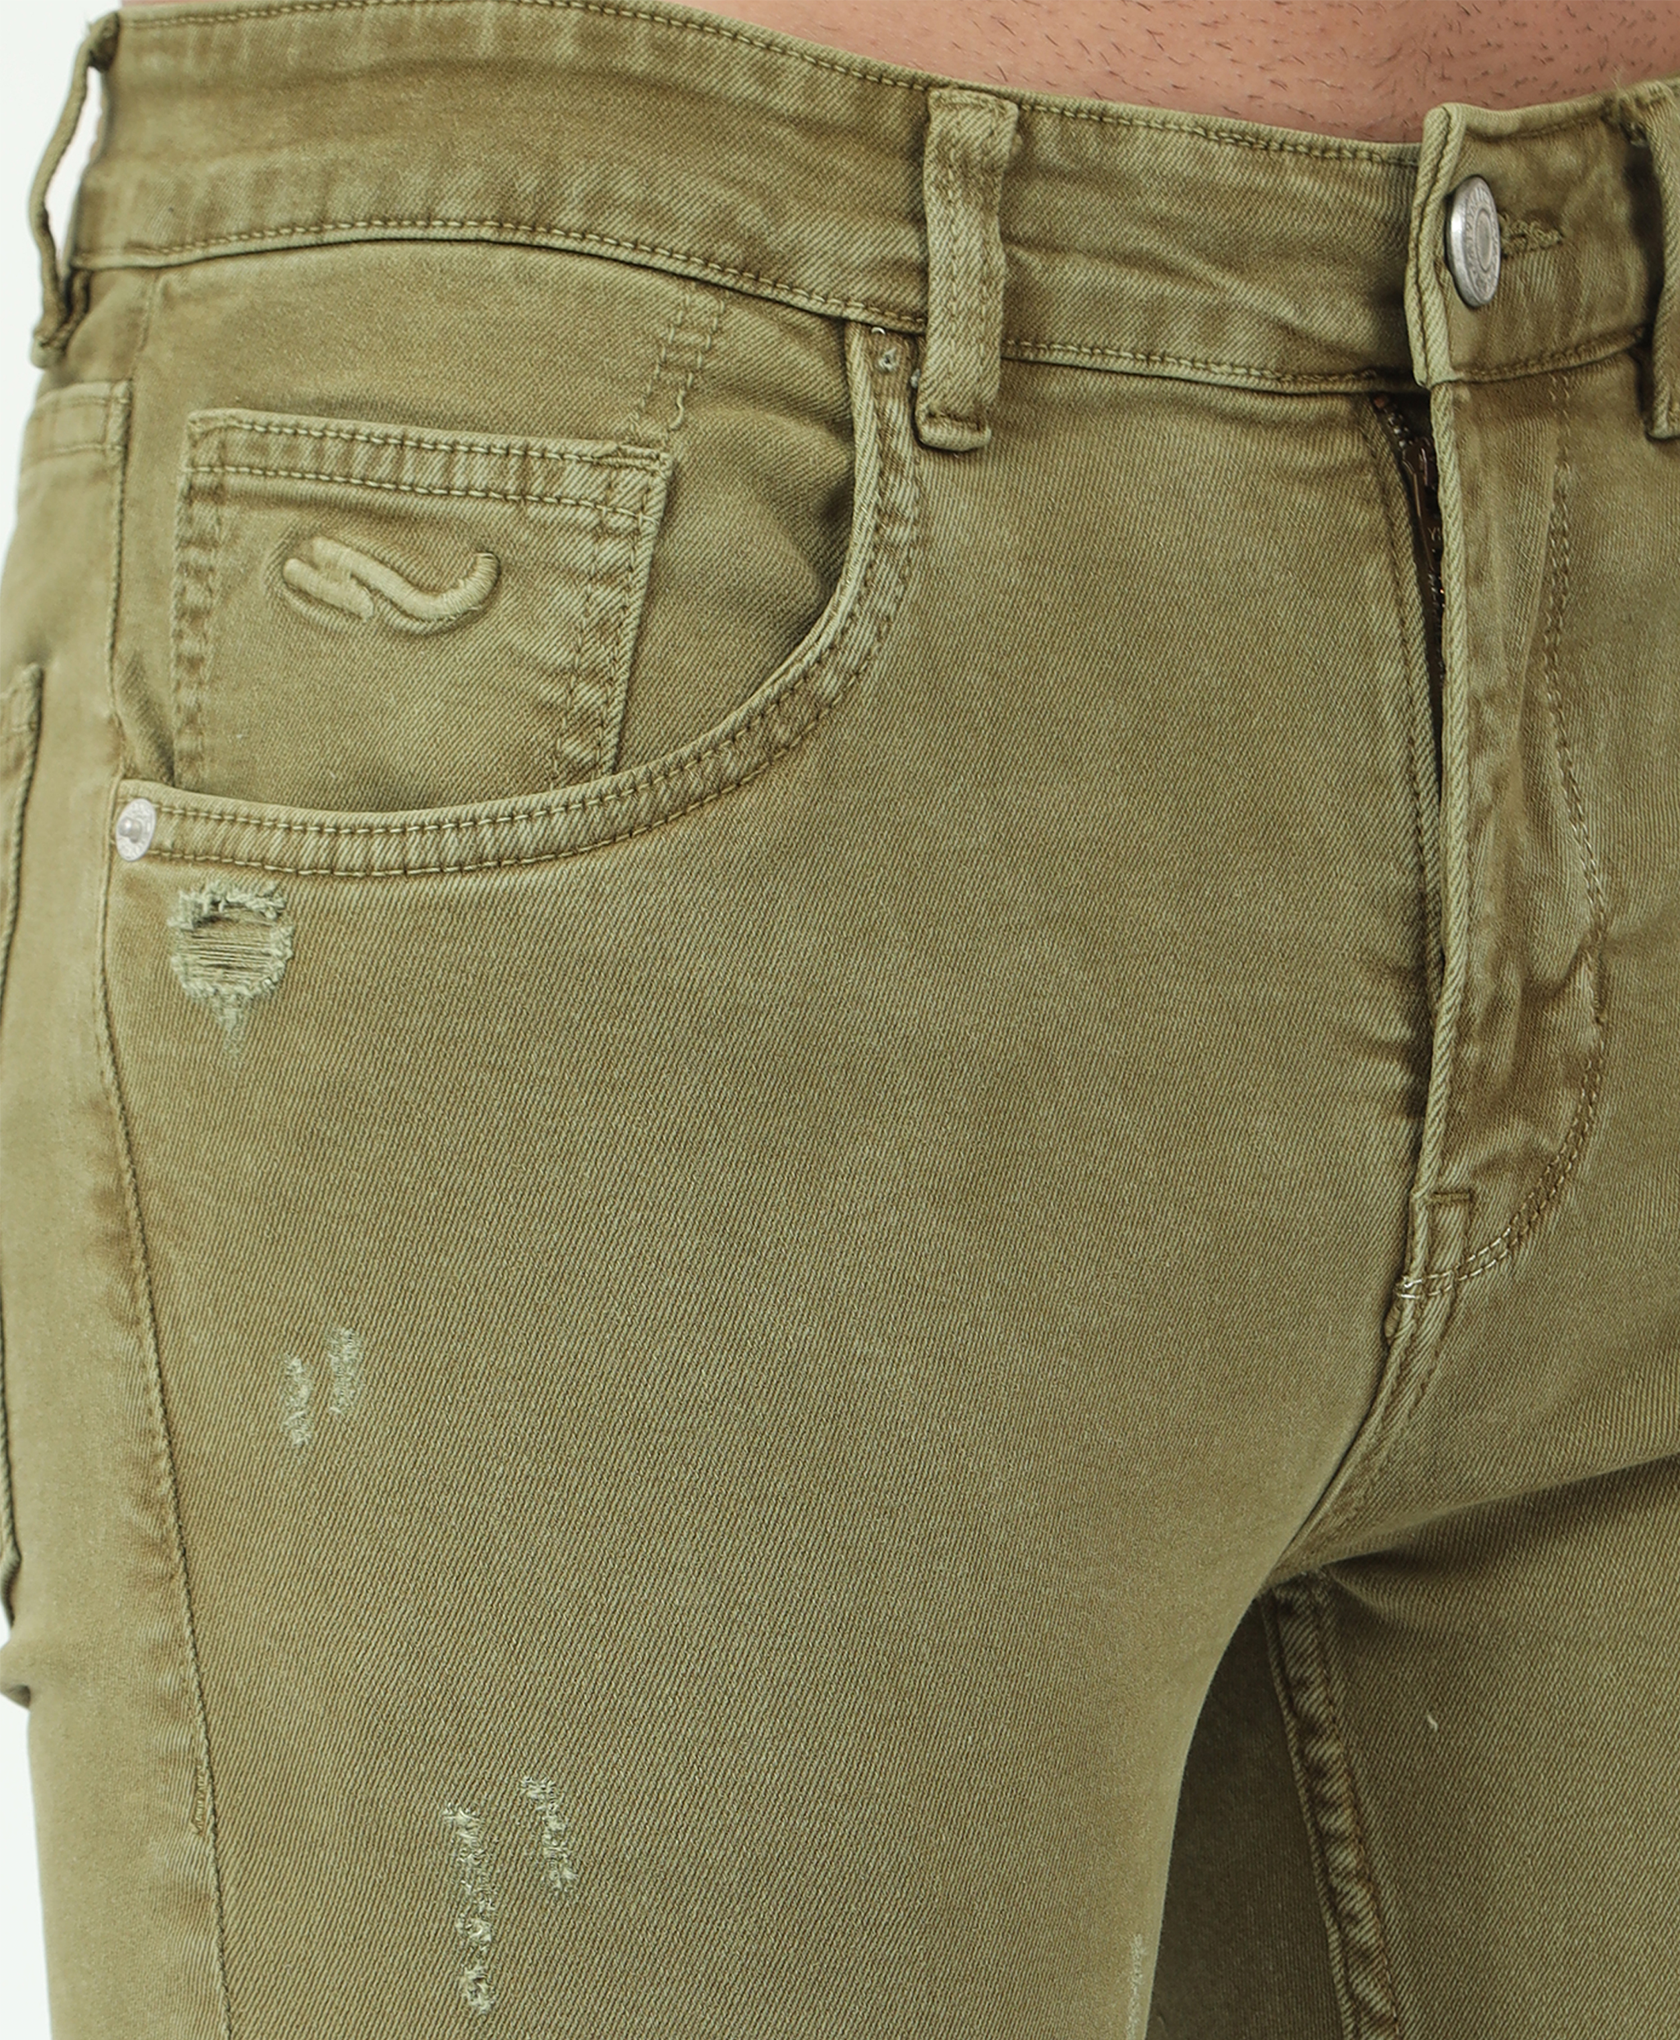 Distressed Olive Slim-fit Jeans